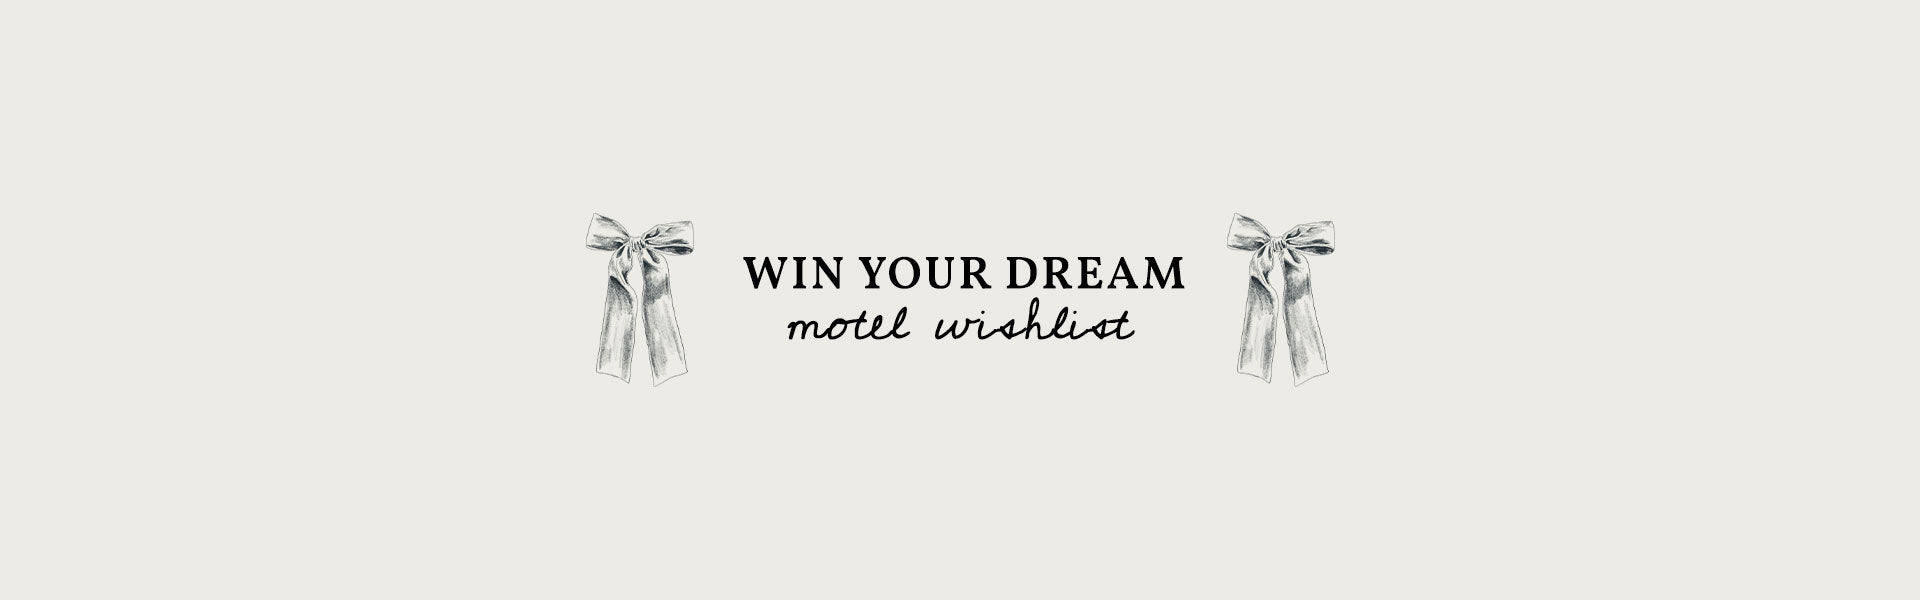 win your dream wishlist